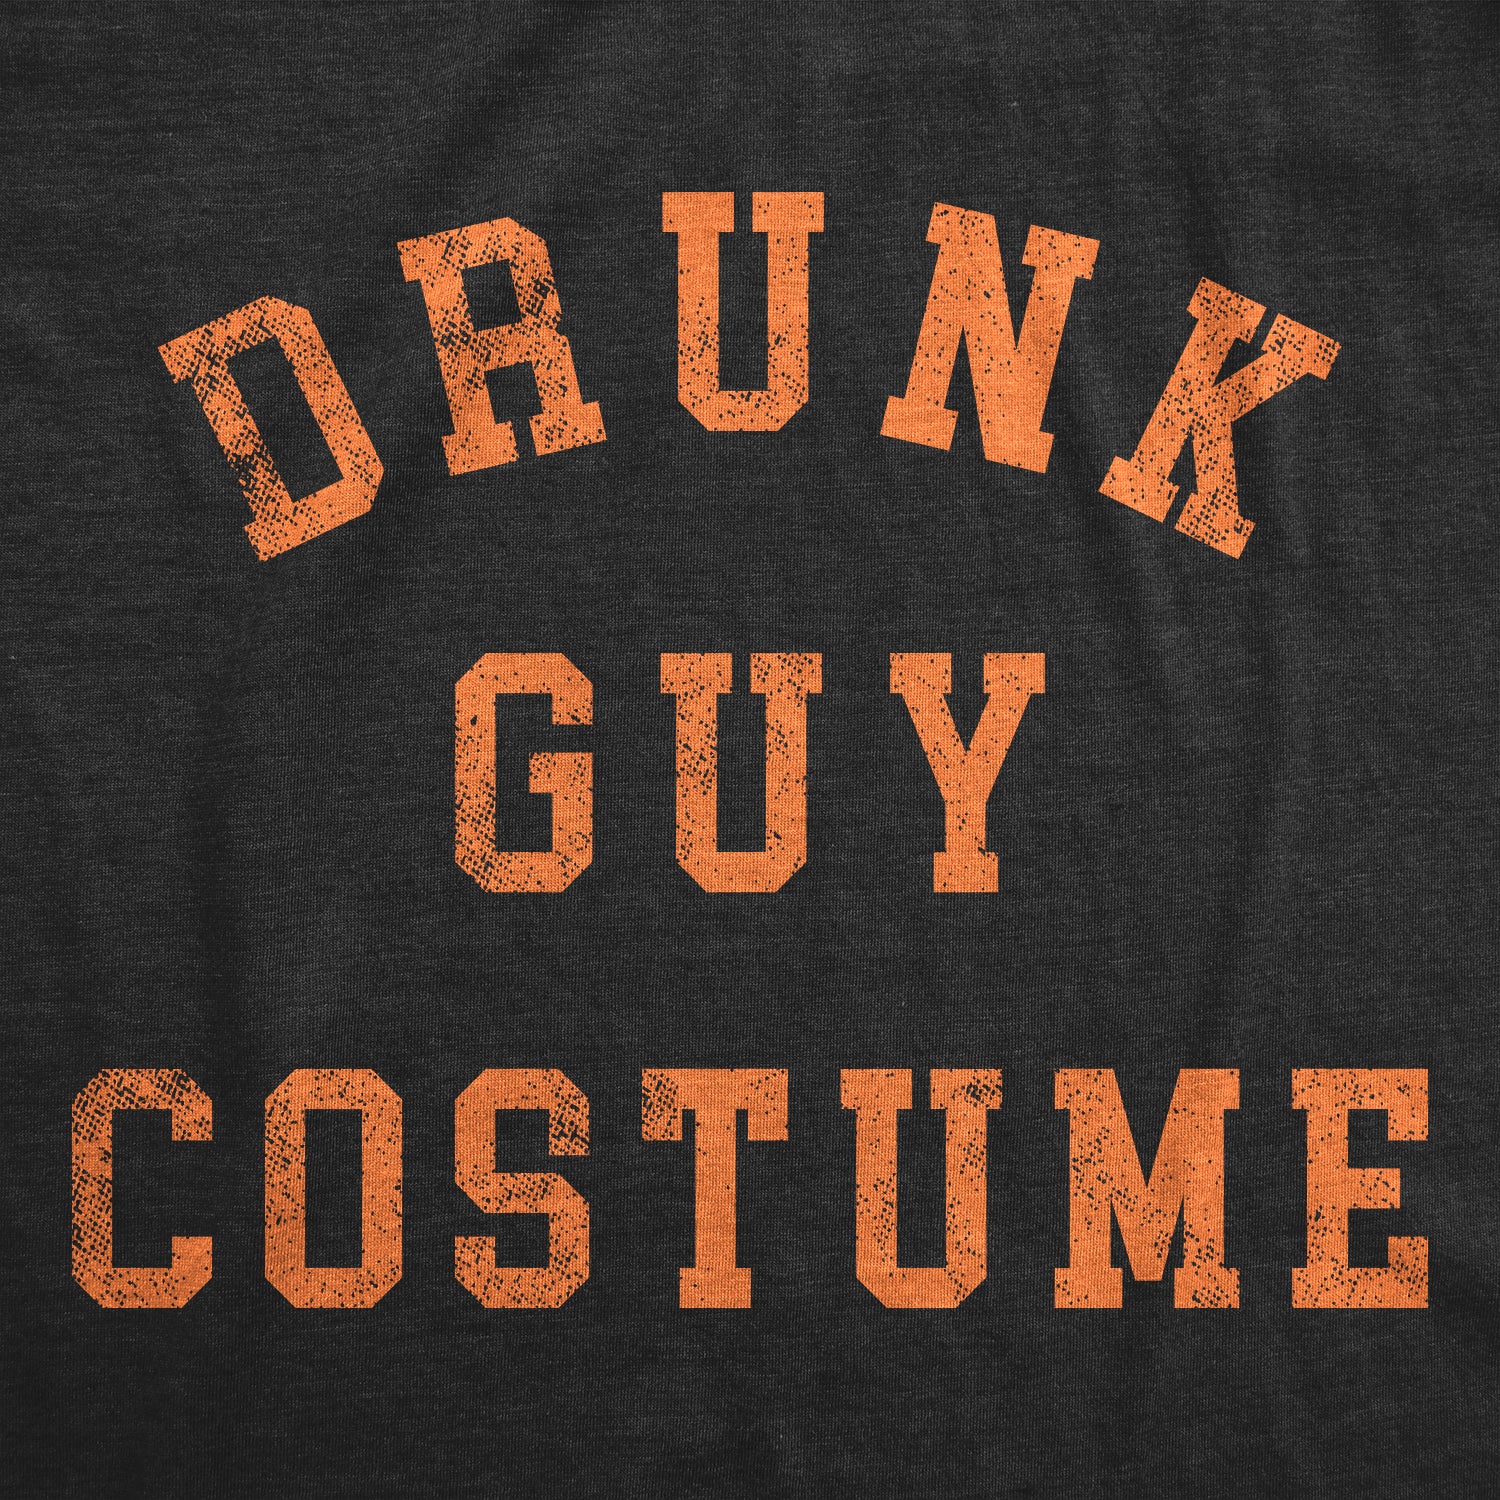 Funny Heather Black - DRUNK Drunk Guy Costume Mens T Shirt Nerdy Halloween Drinking Tee